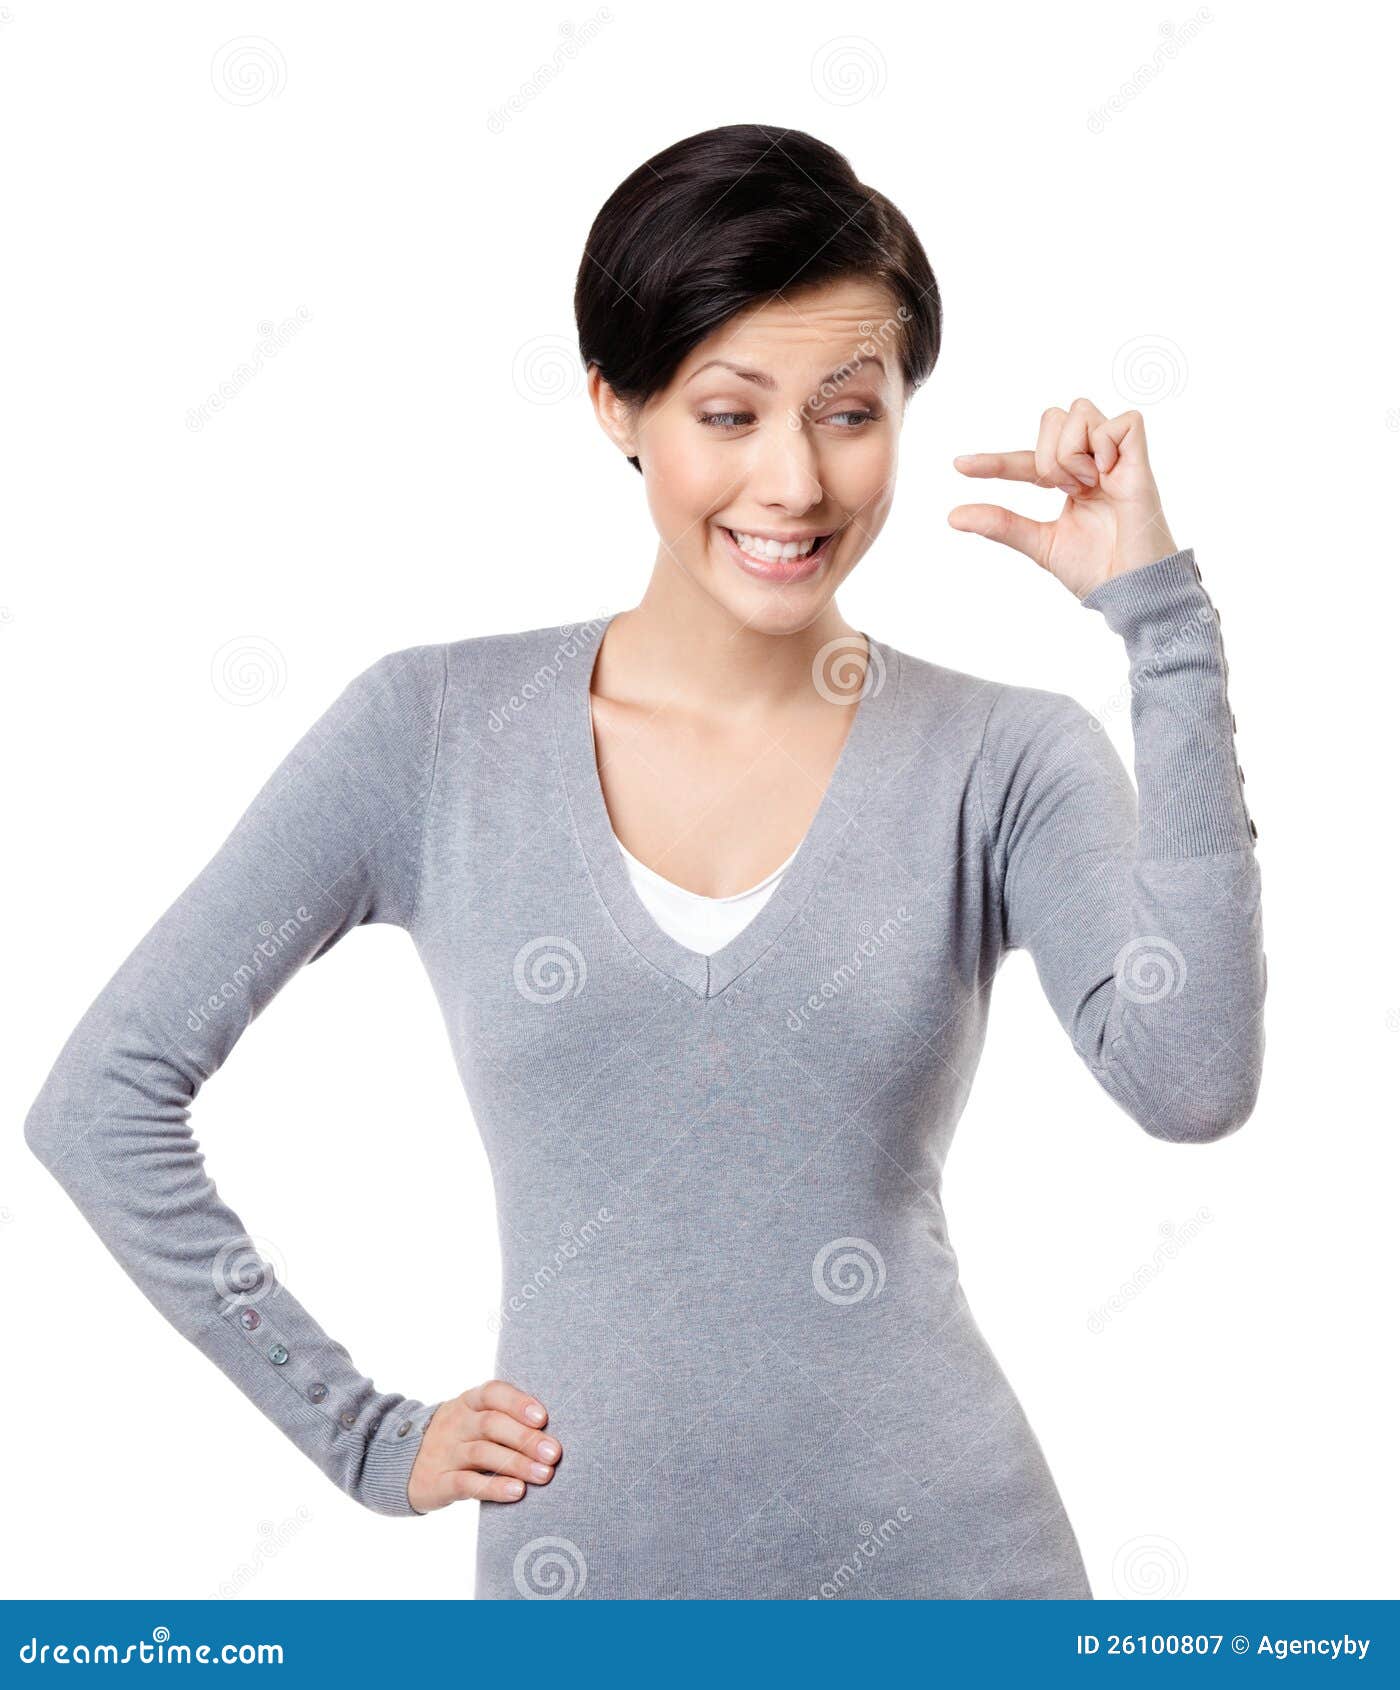 mocking-woman-gestures-small-amount-26100807.jpg